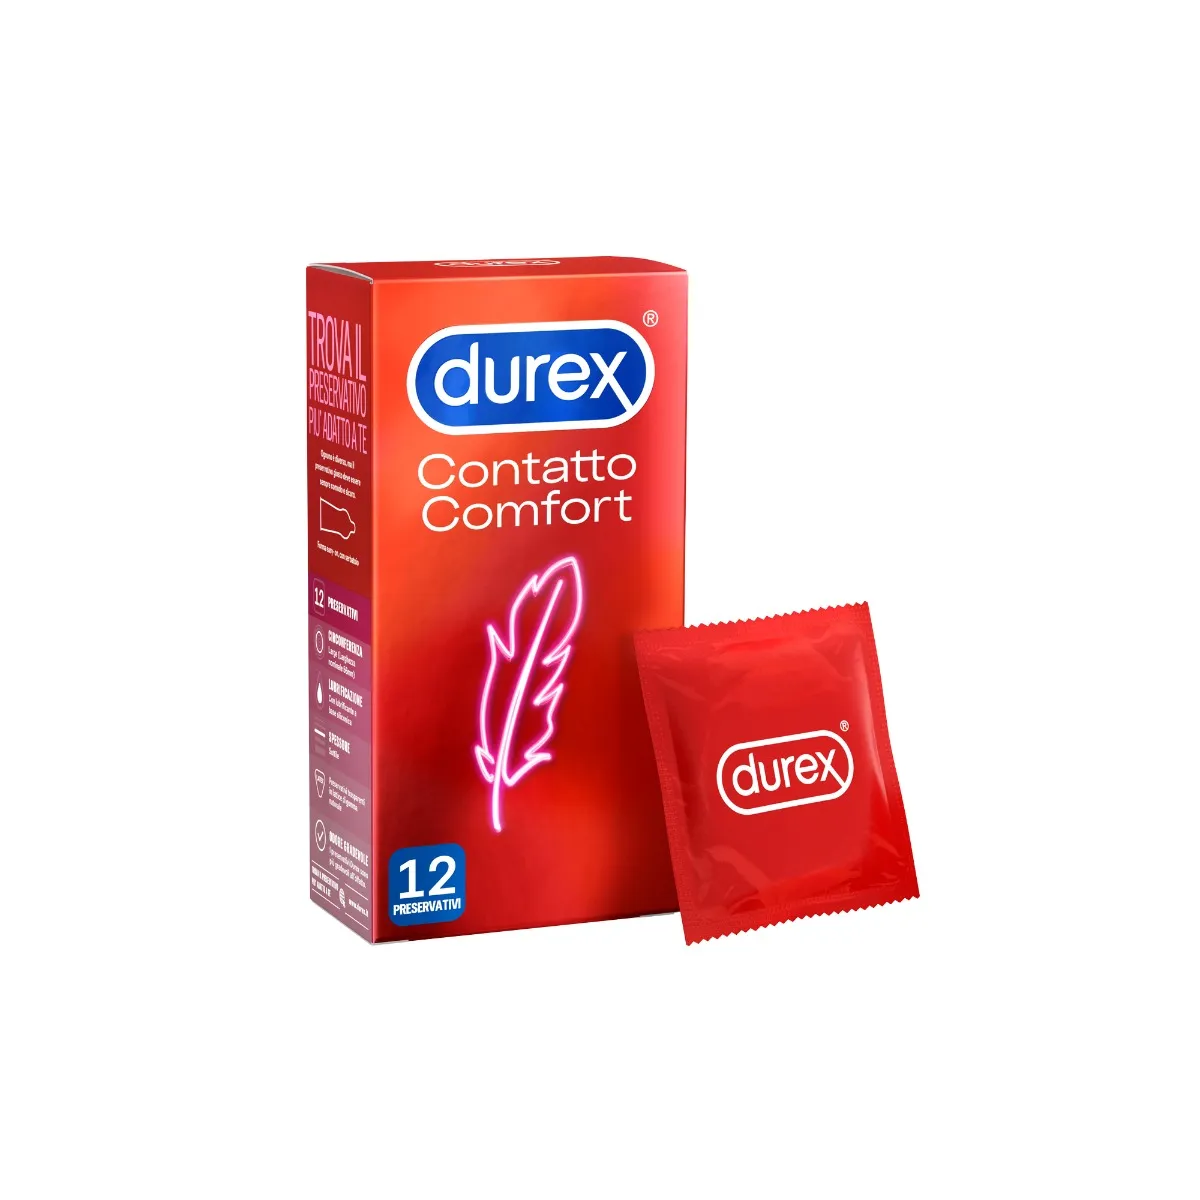 Durex Contatto Comfort Profilattici Sottili 12 Pezzi